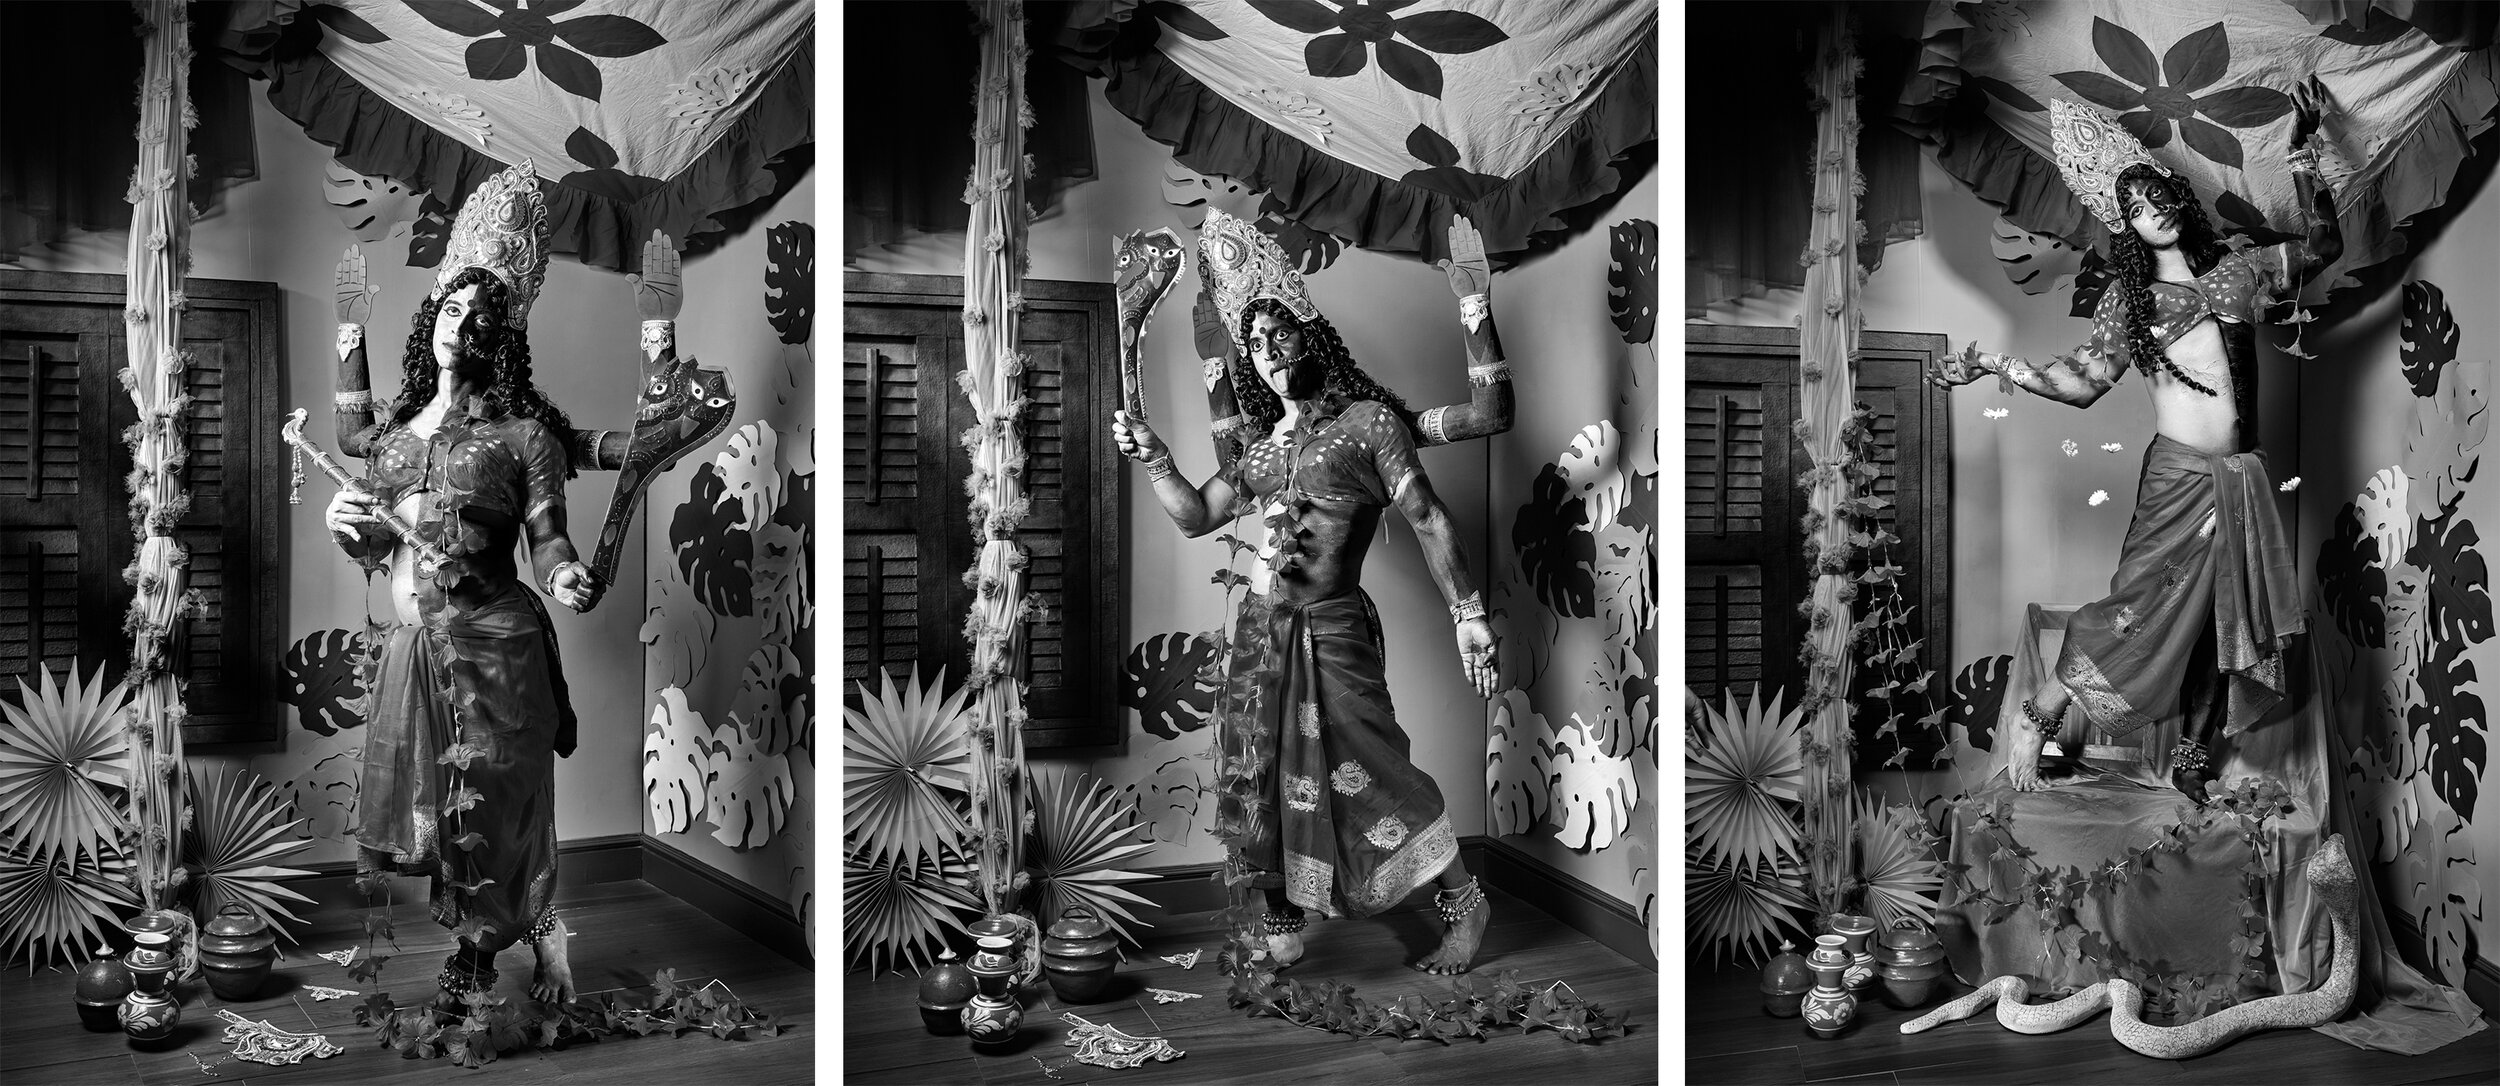 Tanmoy As A Bahurupi Impersonating Krishna-Kali, Kali and Chaitanya-Kali, Kolkata, 2020